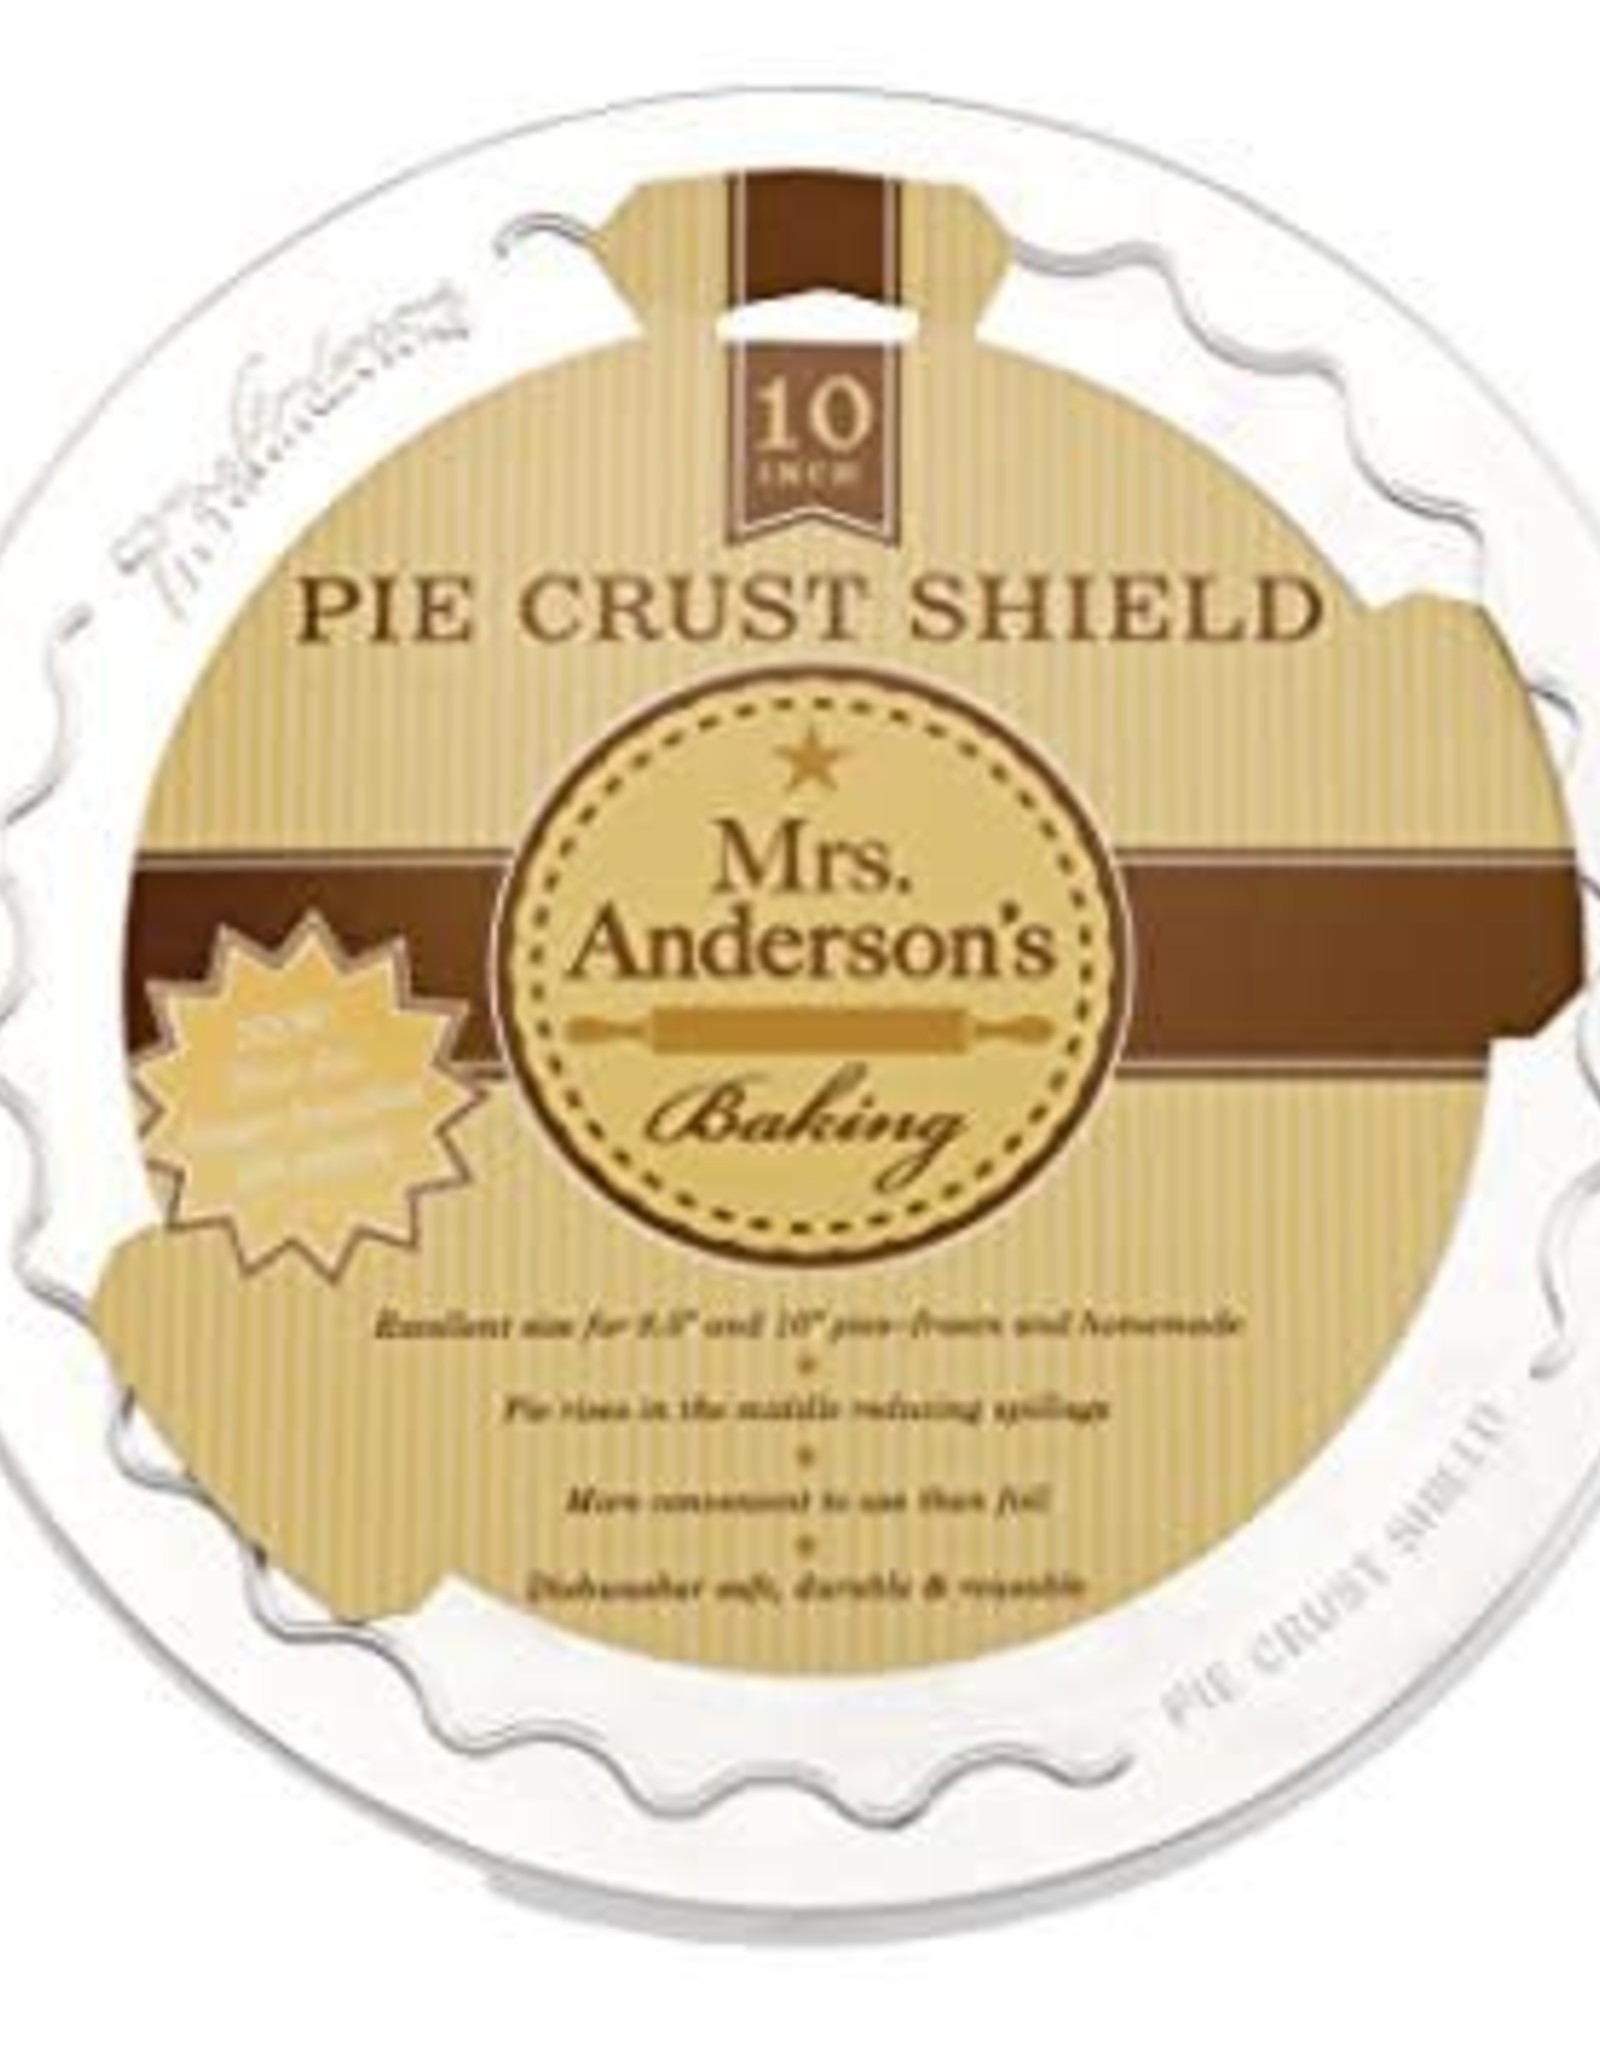 10 inch Pie Crust Shield